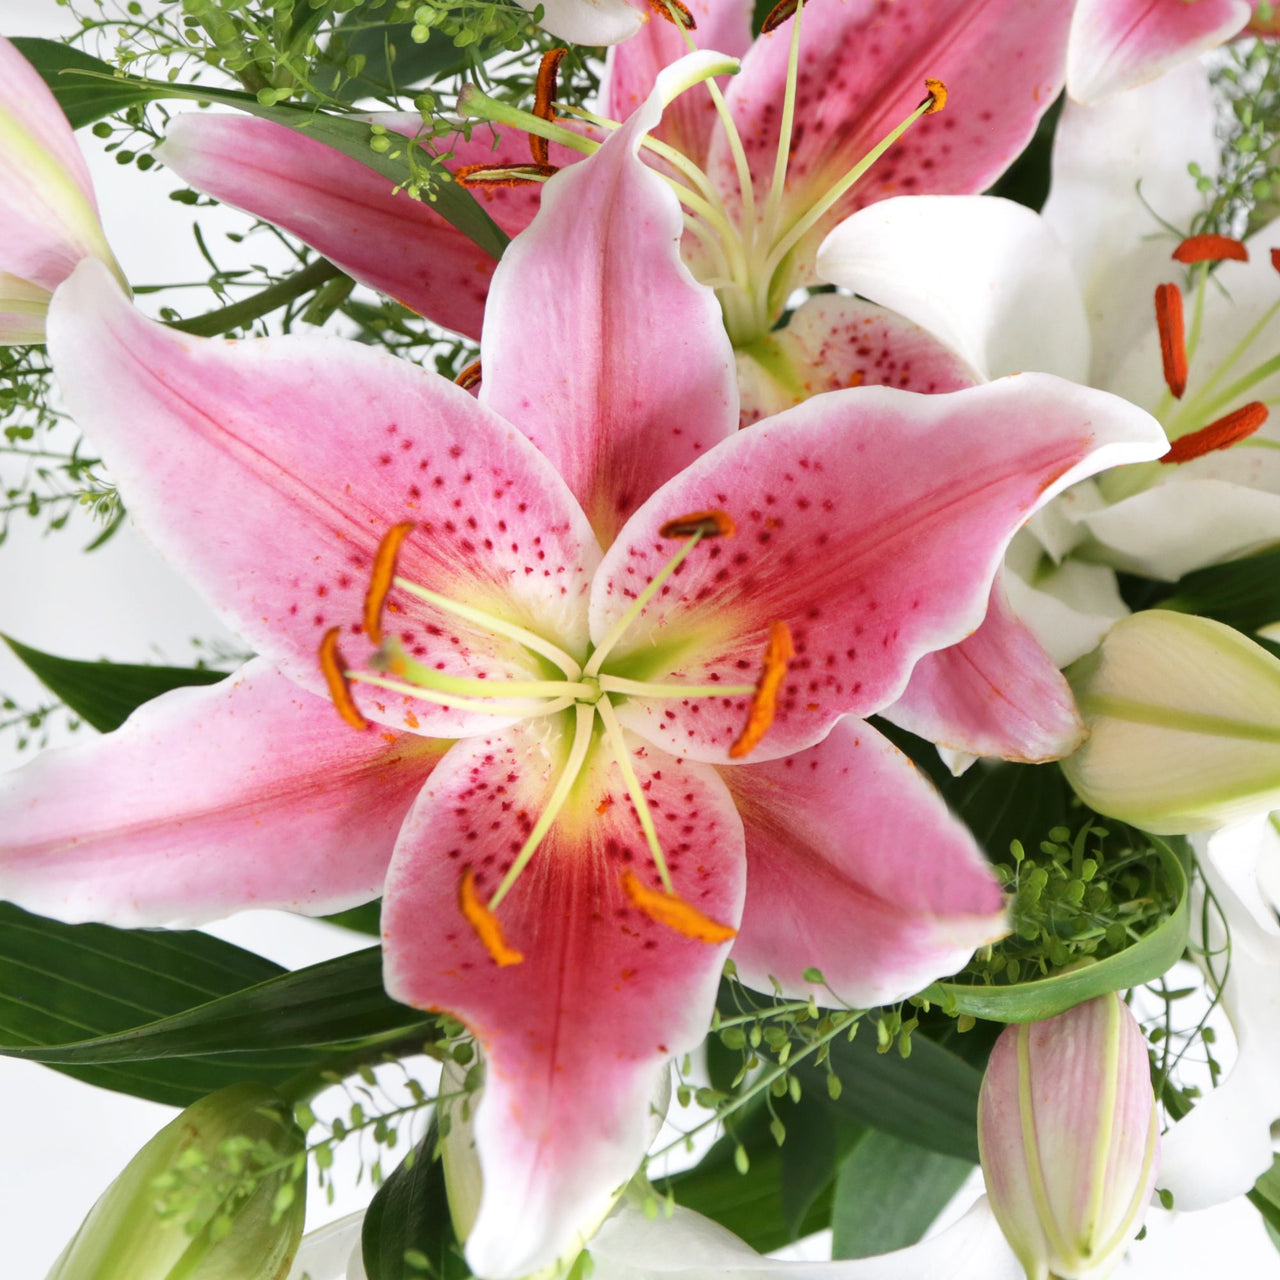 Oriental Flower Images - Oriental Flower Arrangement Hd Format ...